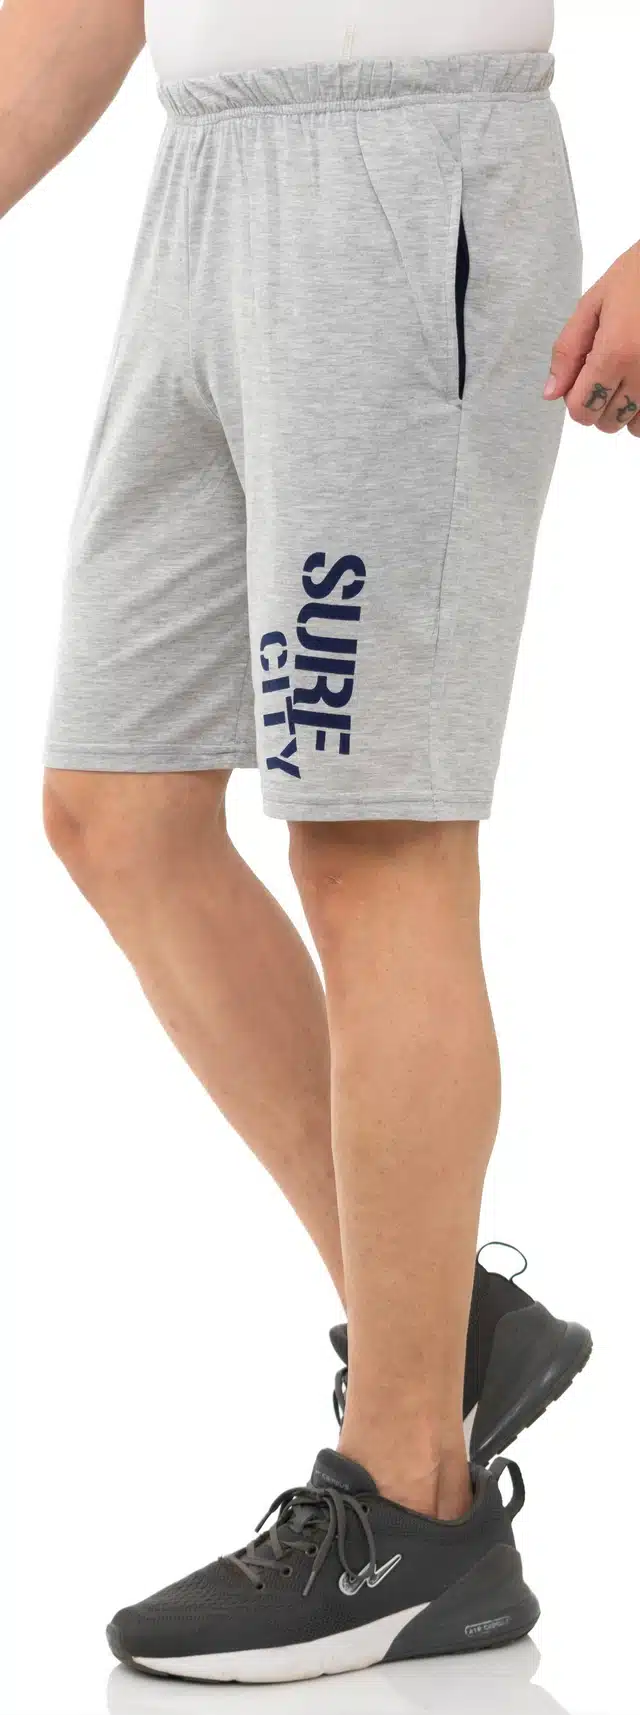 Shorts for Men (Grey, 4XL)